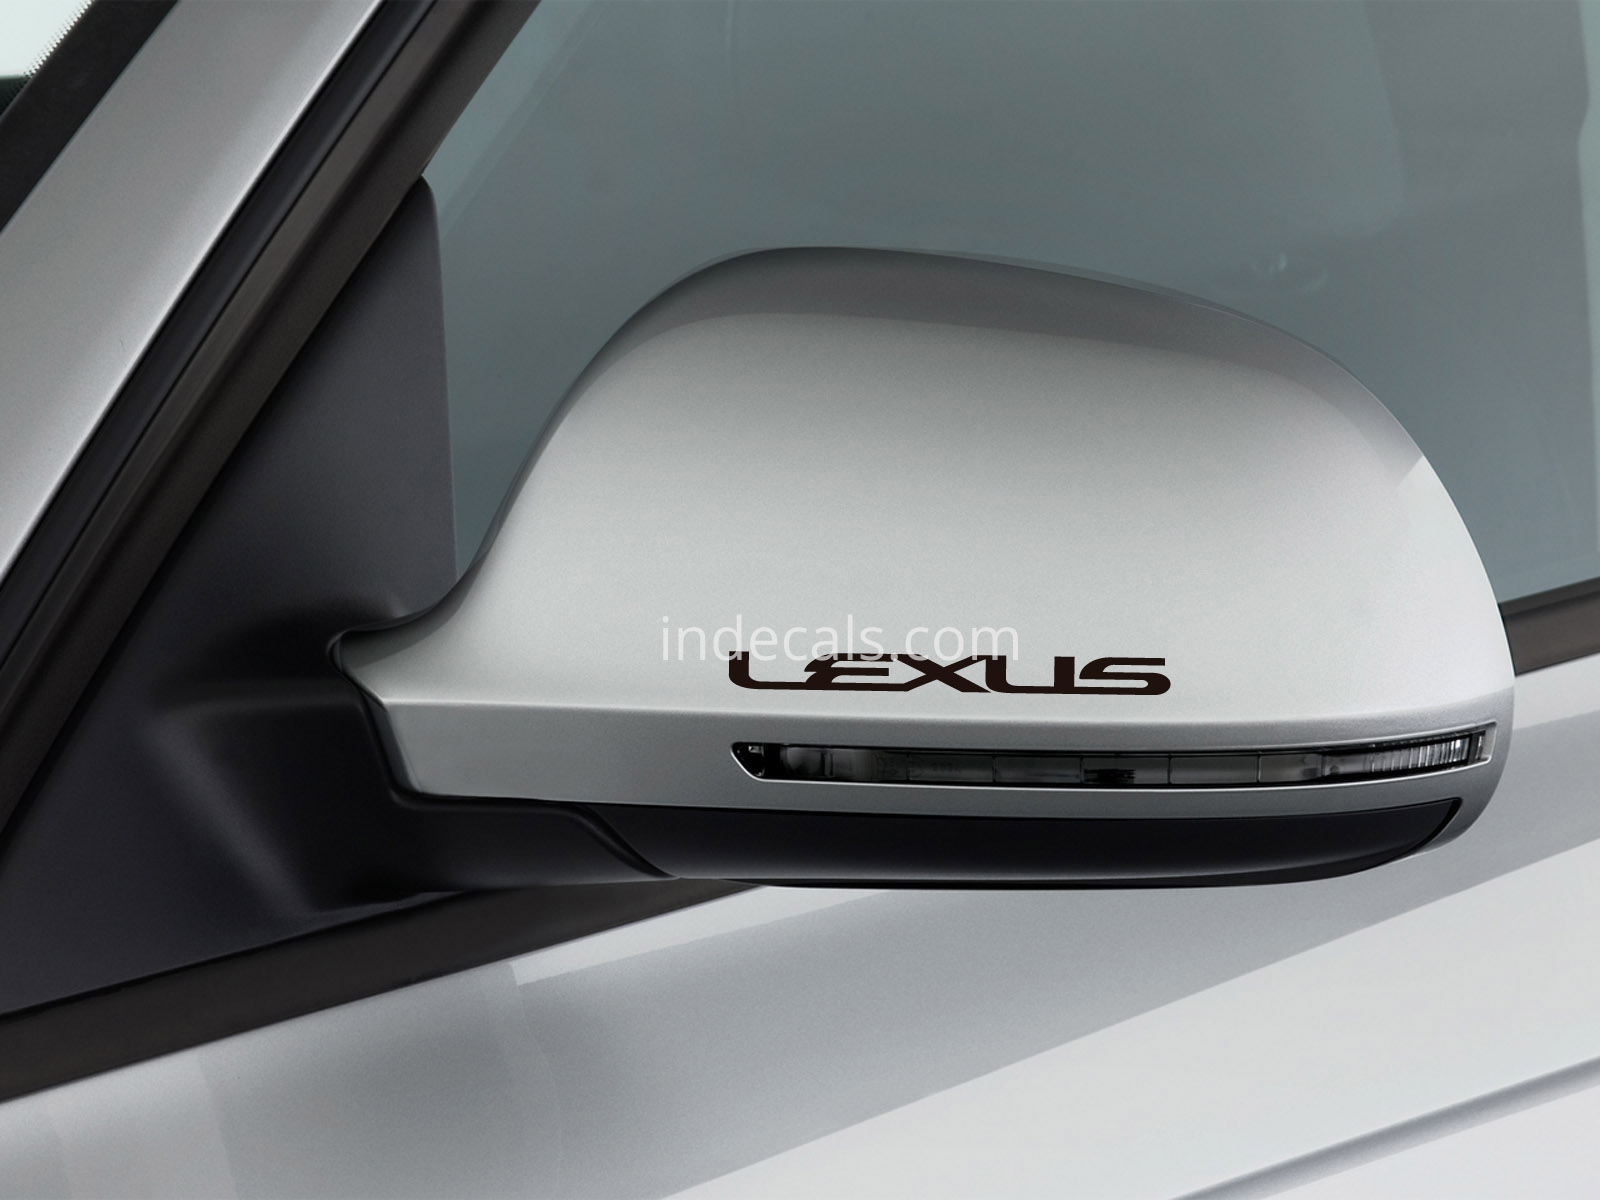 3 x Lexus Stickers for Mirrors - Black